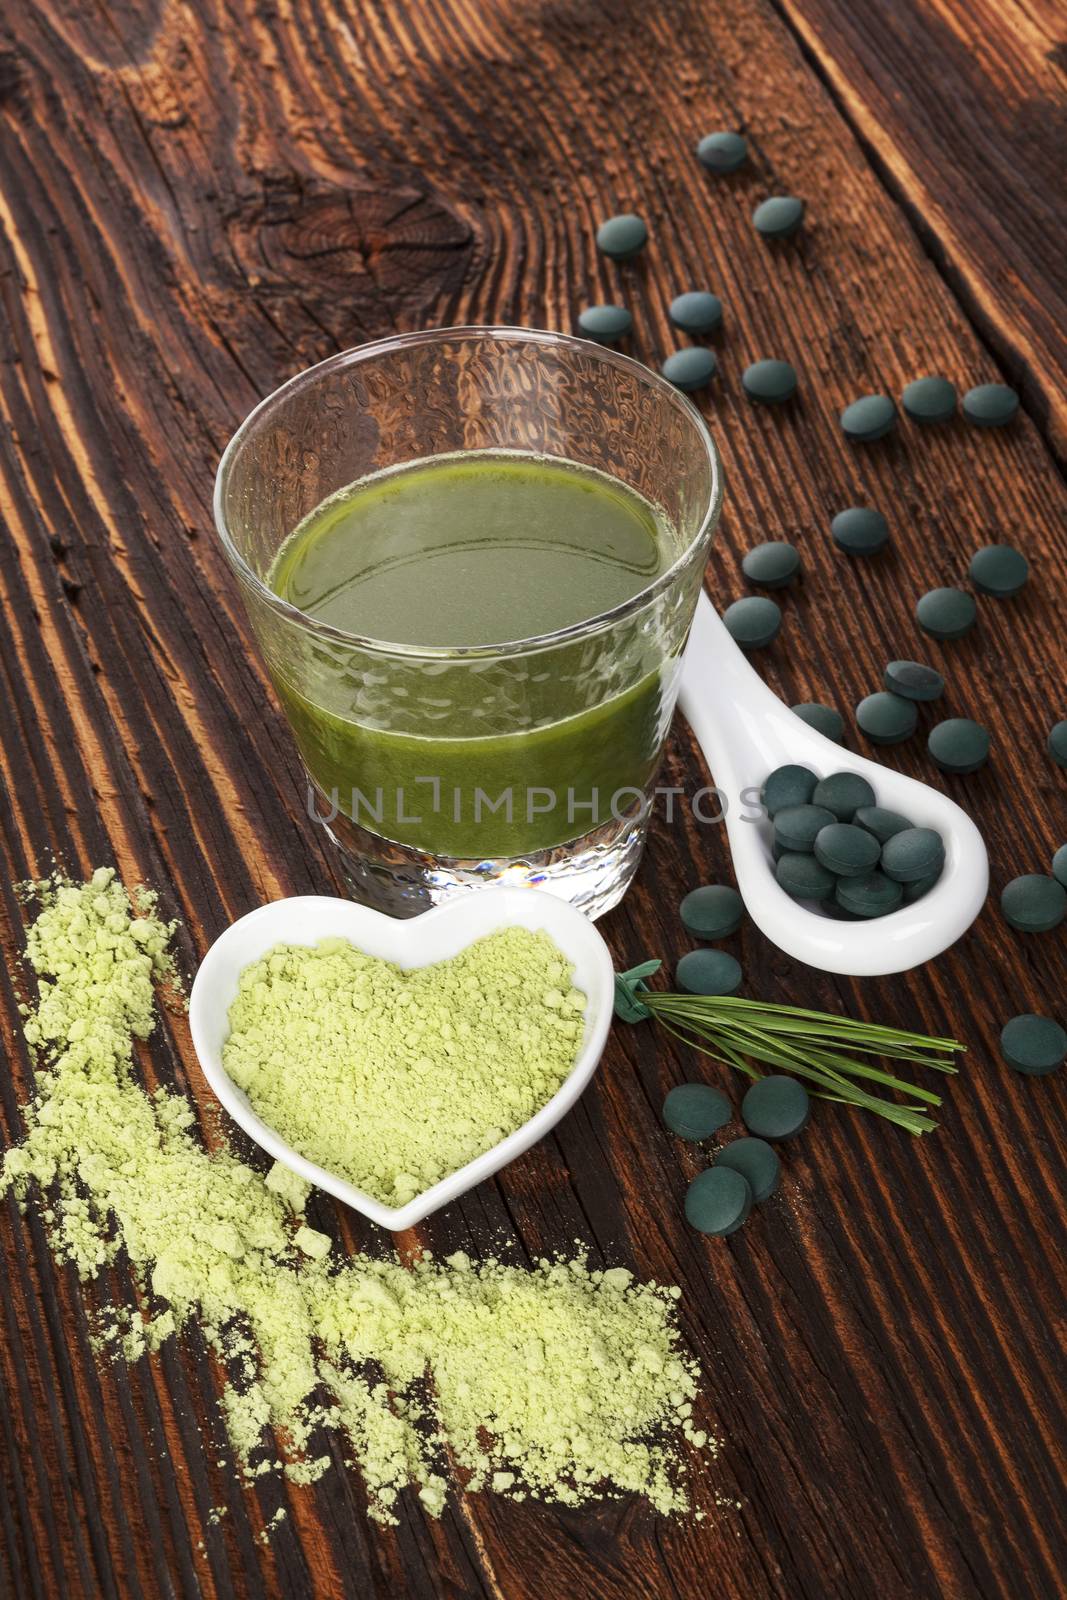 Spirulina, chlorella, barley and wheatgrass. Green supplement, superfood detox.